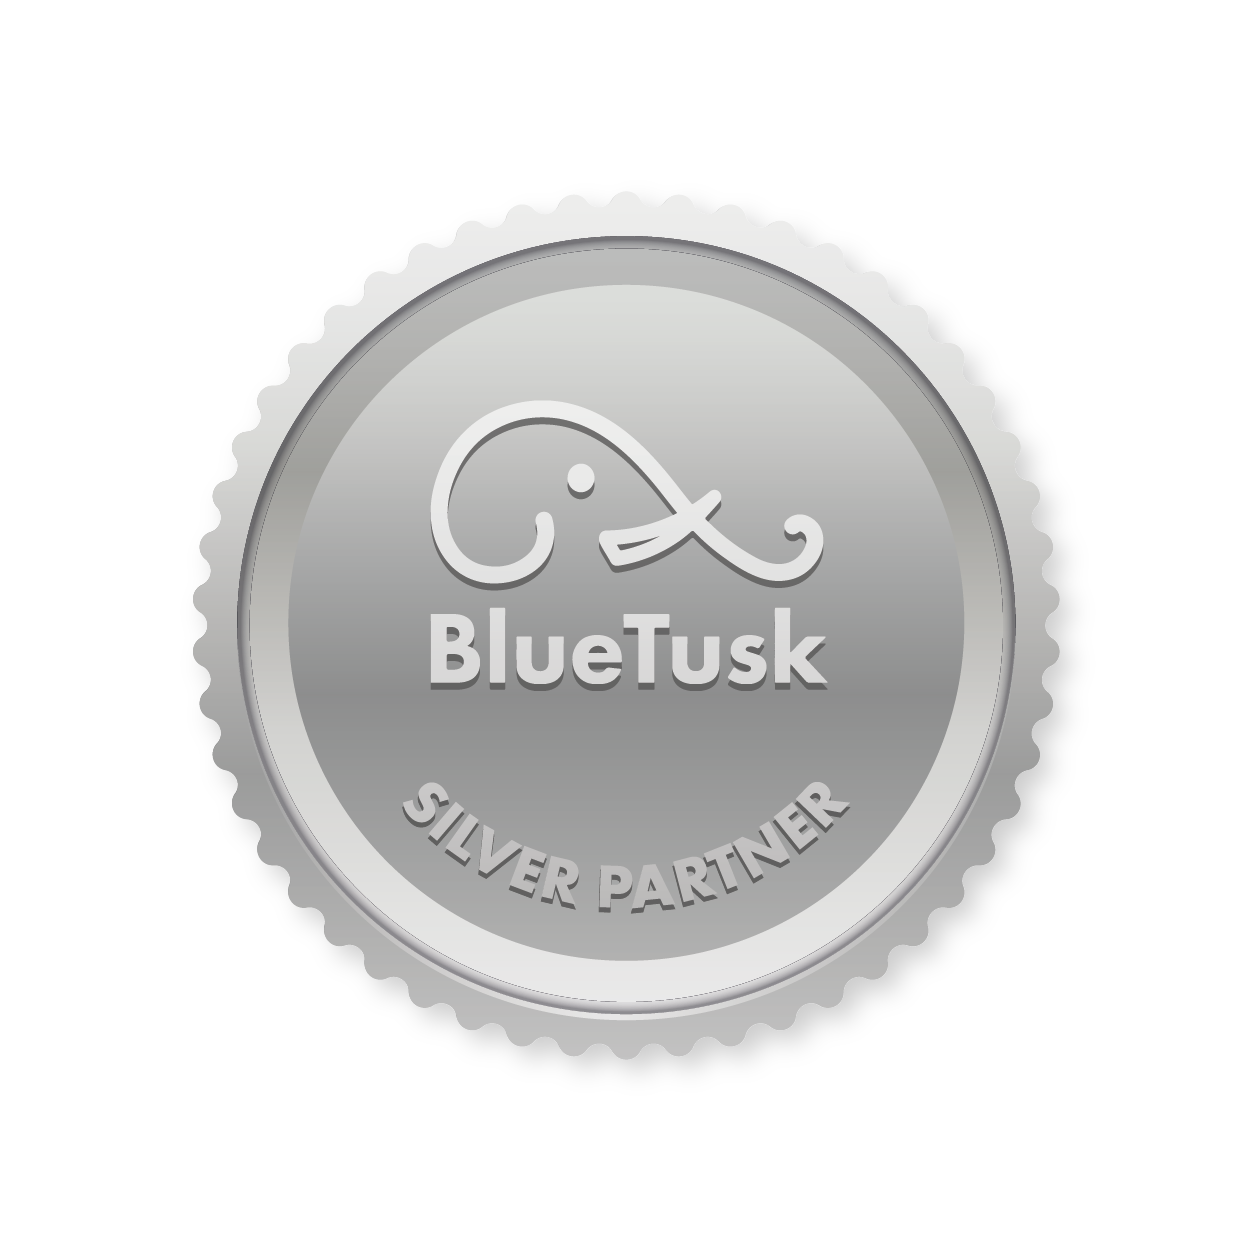 BlueTusk Silver Partner Package